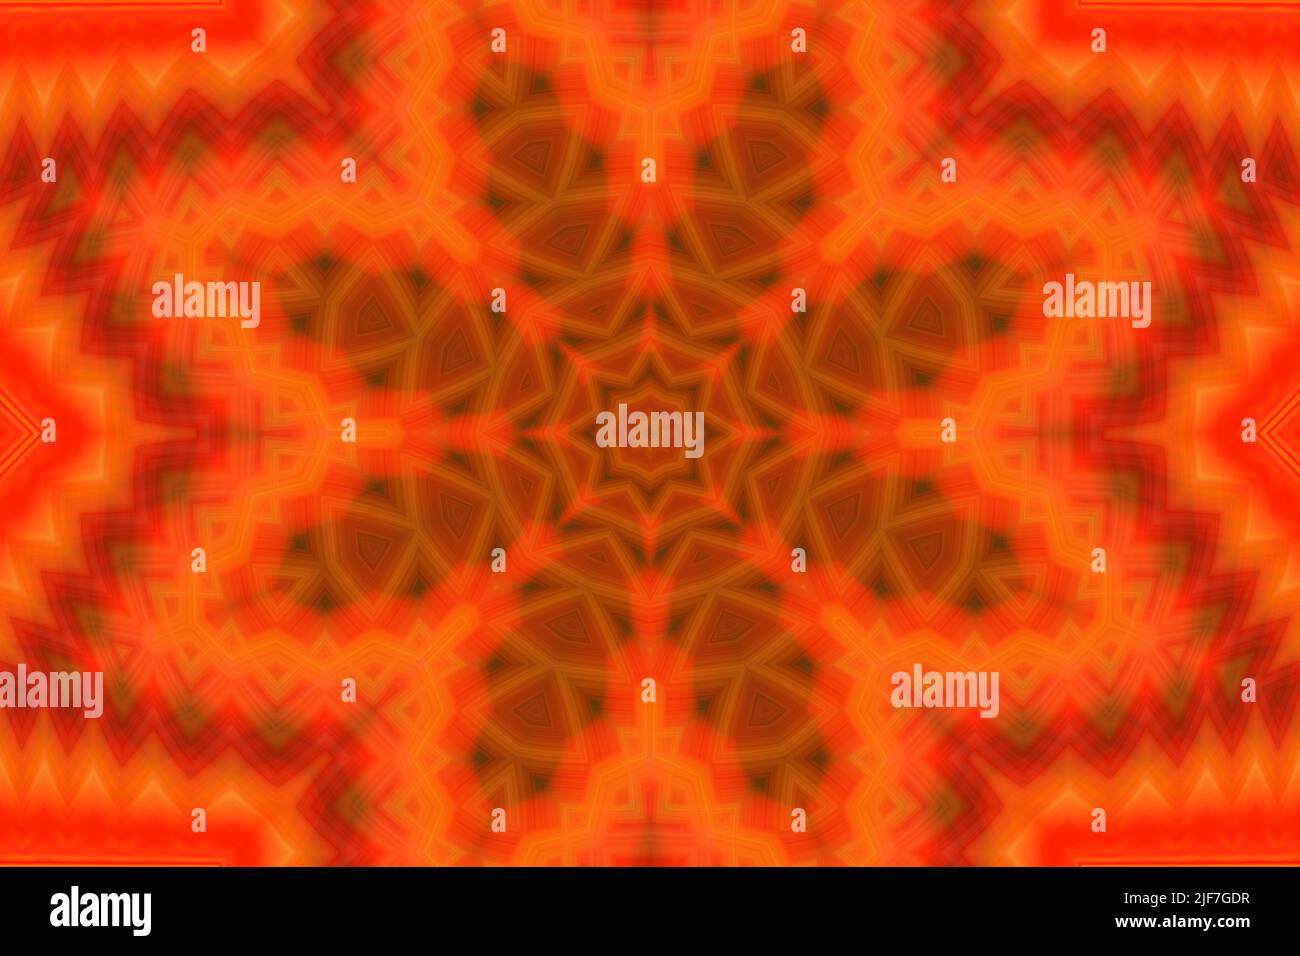 Digital Art, 3D illustration, abstract orange geometric kaleidoscope pattern Stock Photo